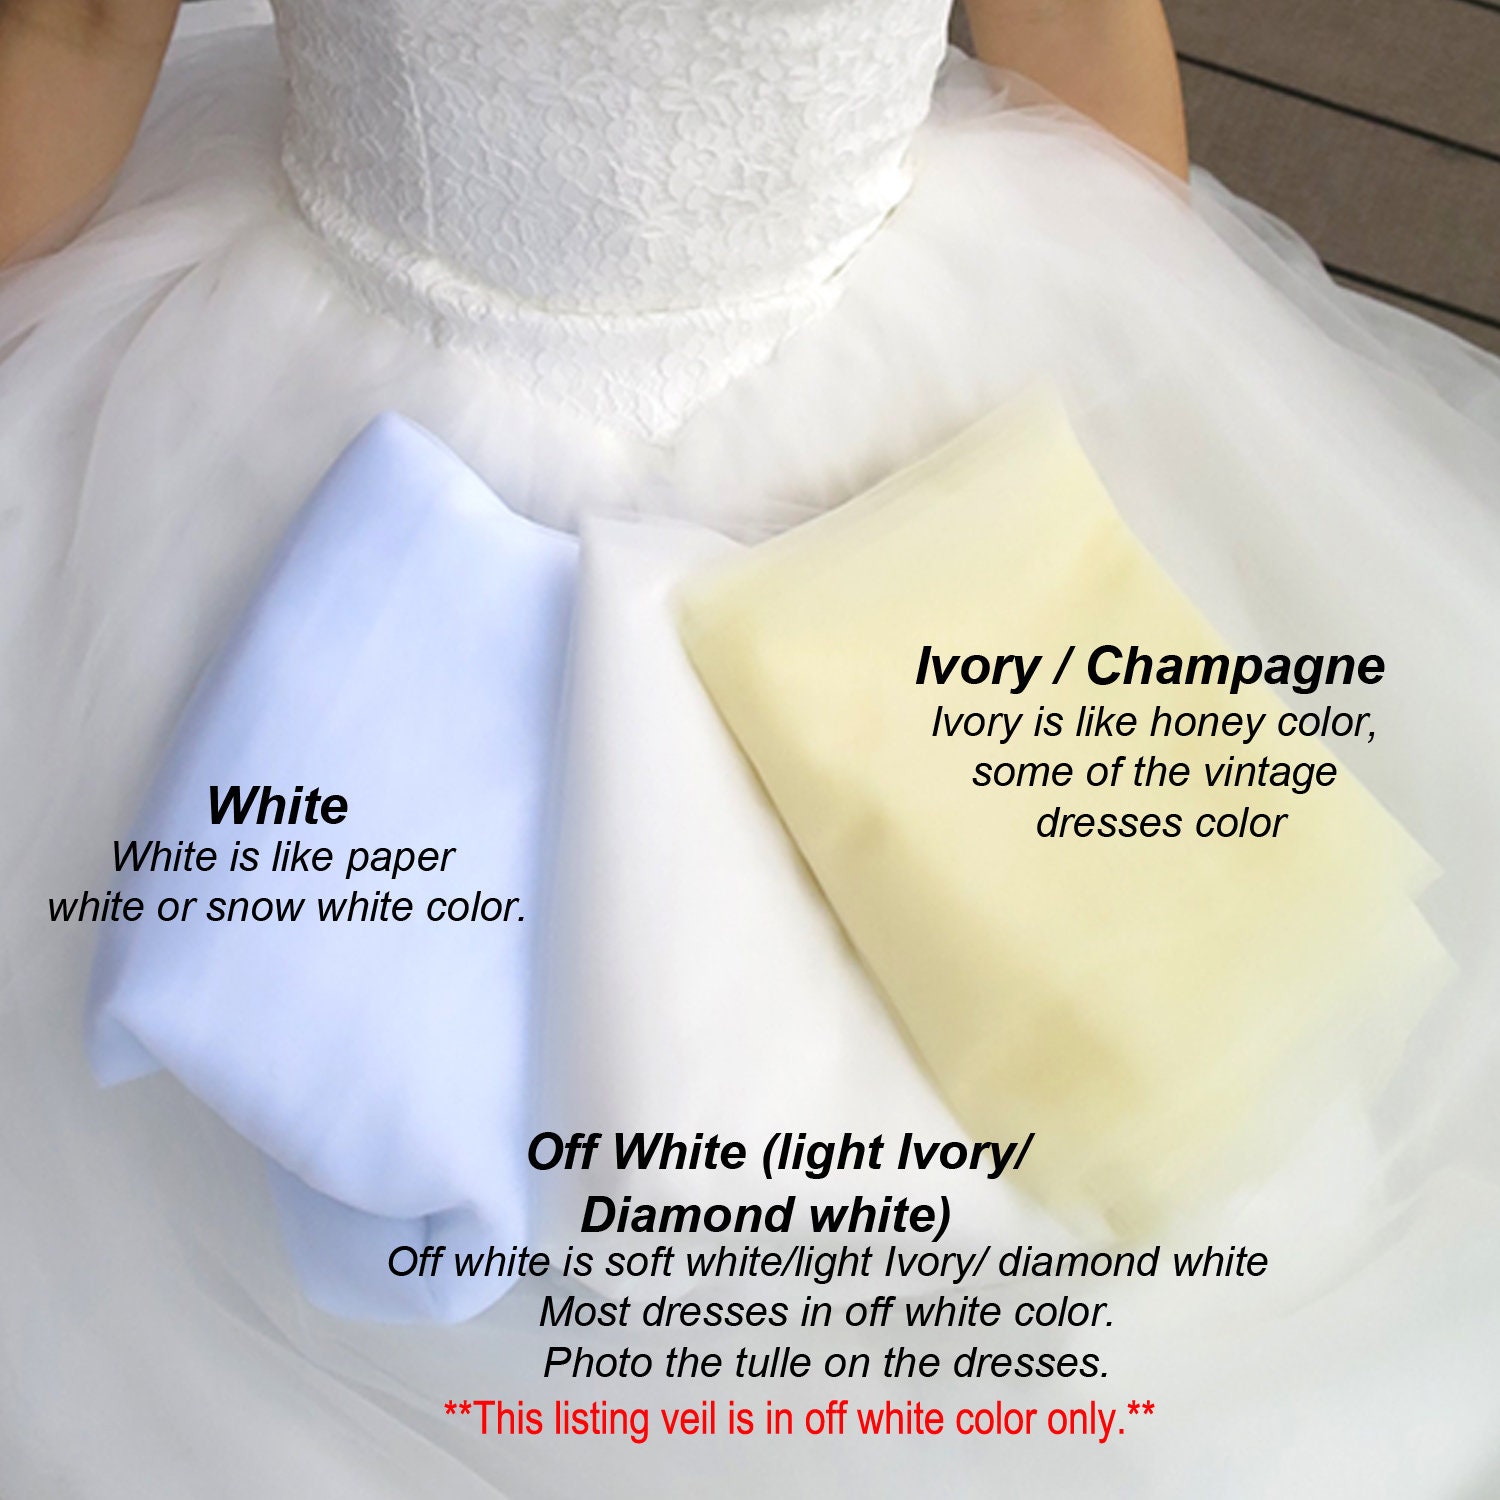 Customizable 2015 Princess Kate Lace Long Mantilla Wedding Veil In Stock,  Perfect Wedding Accessory From Yateweddingdress, $6.04